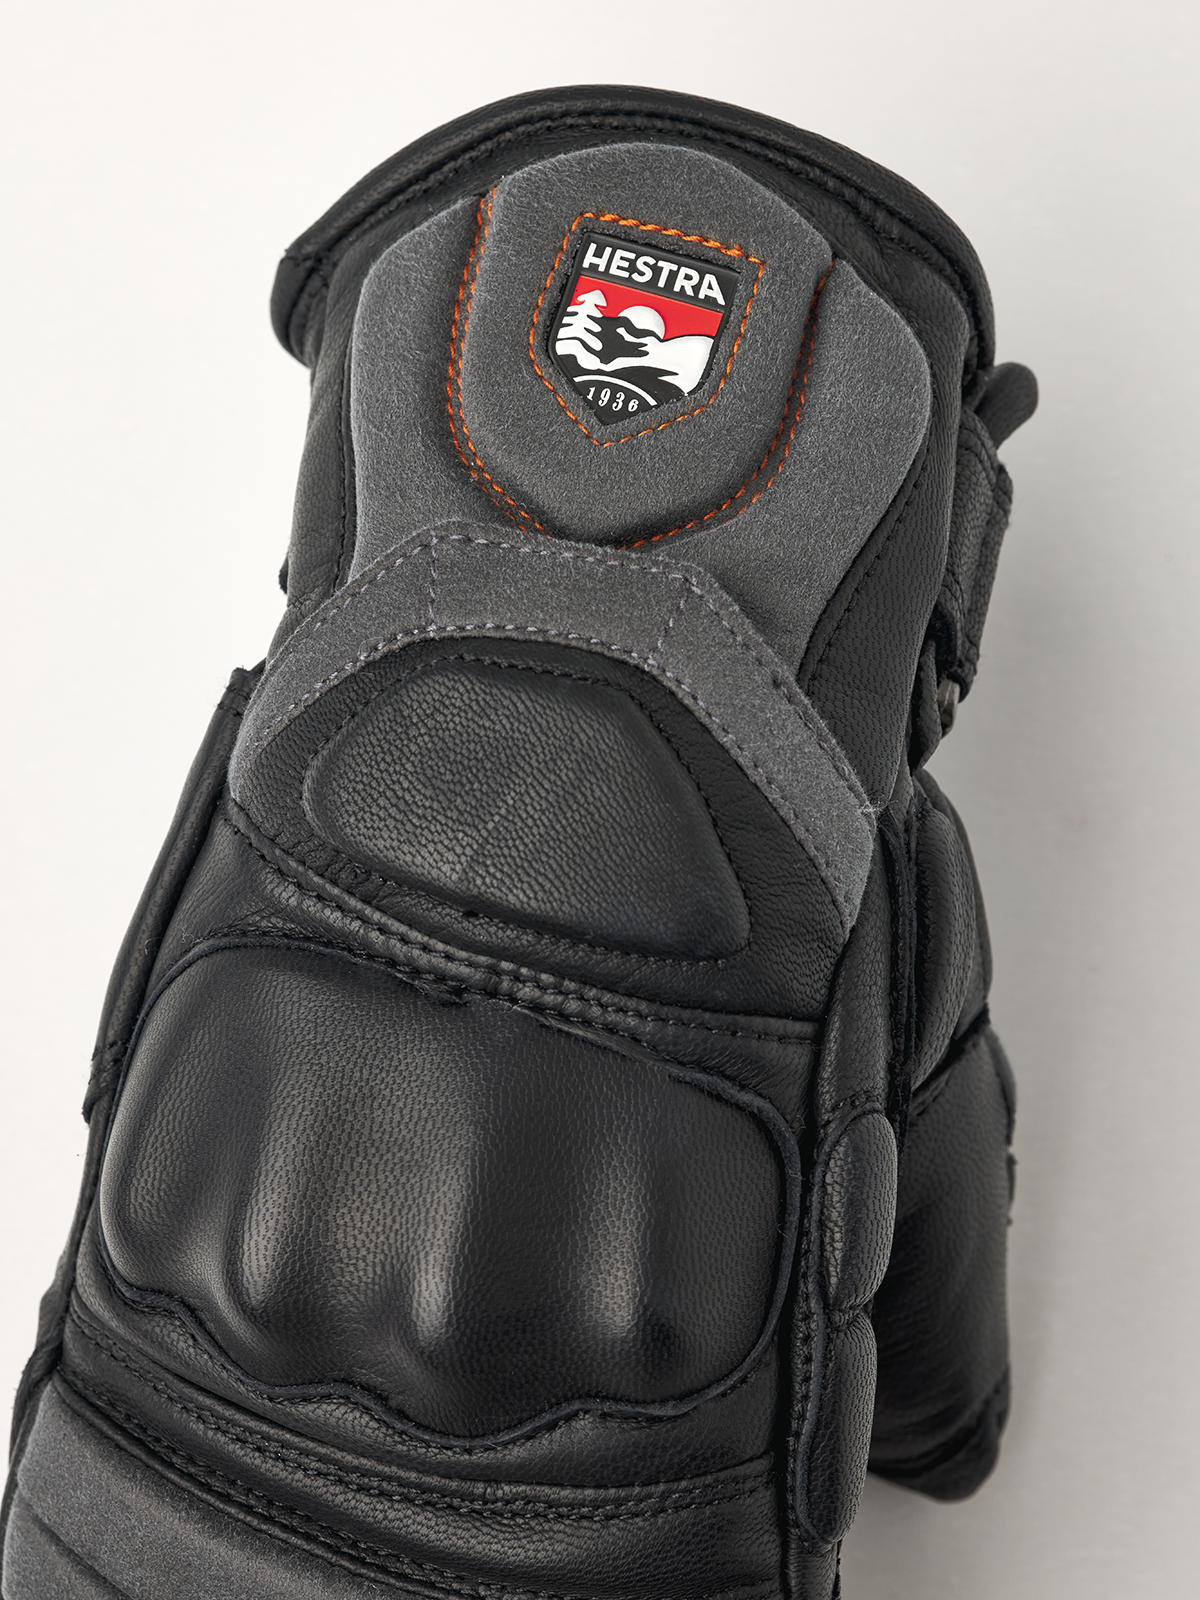 Impact Racing Jr. Mitt - Black & Flame red | Hestra Gloves